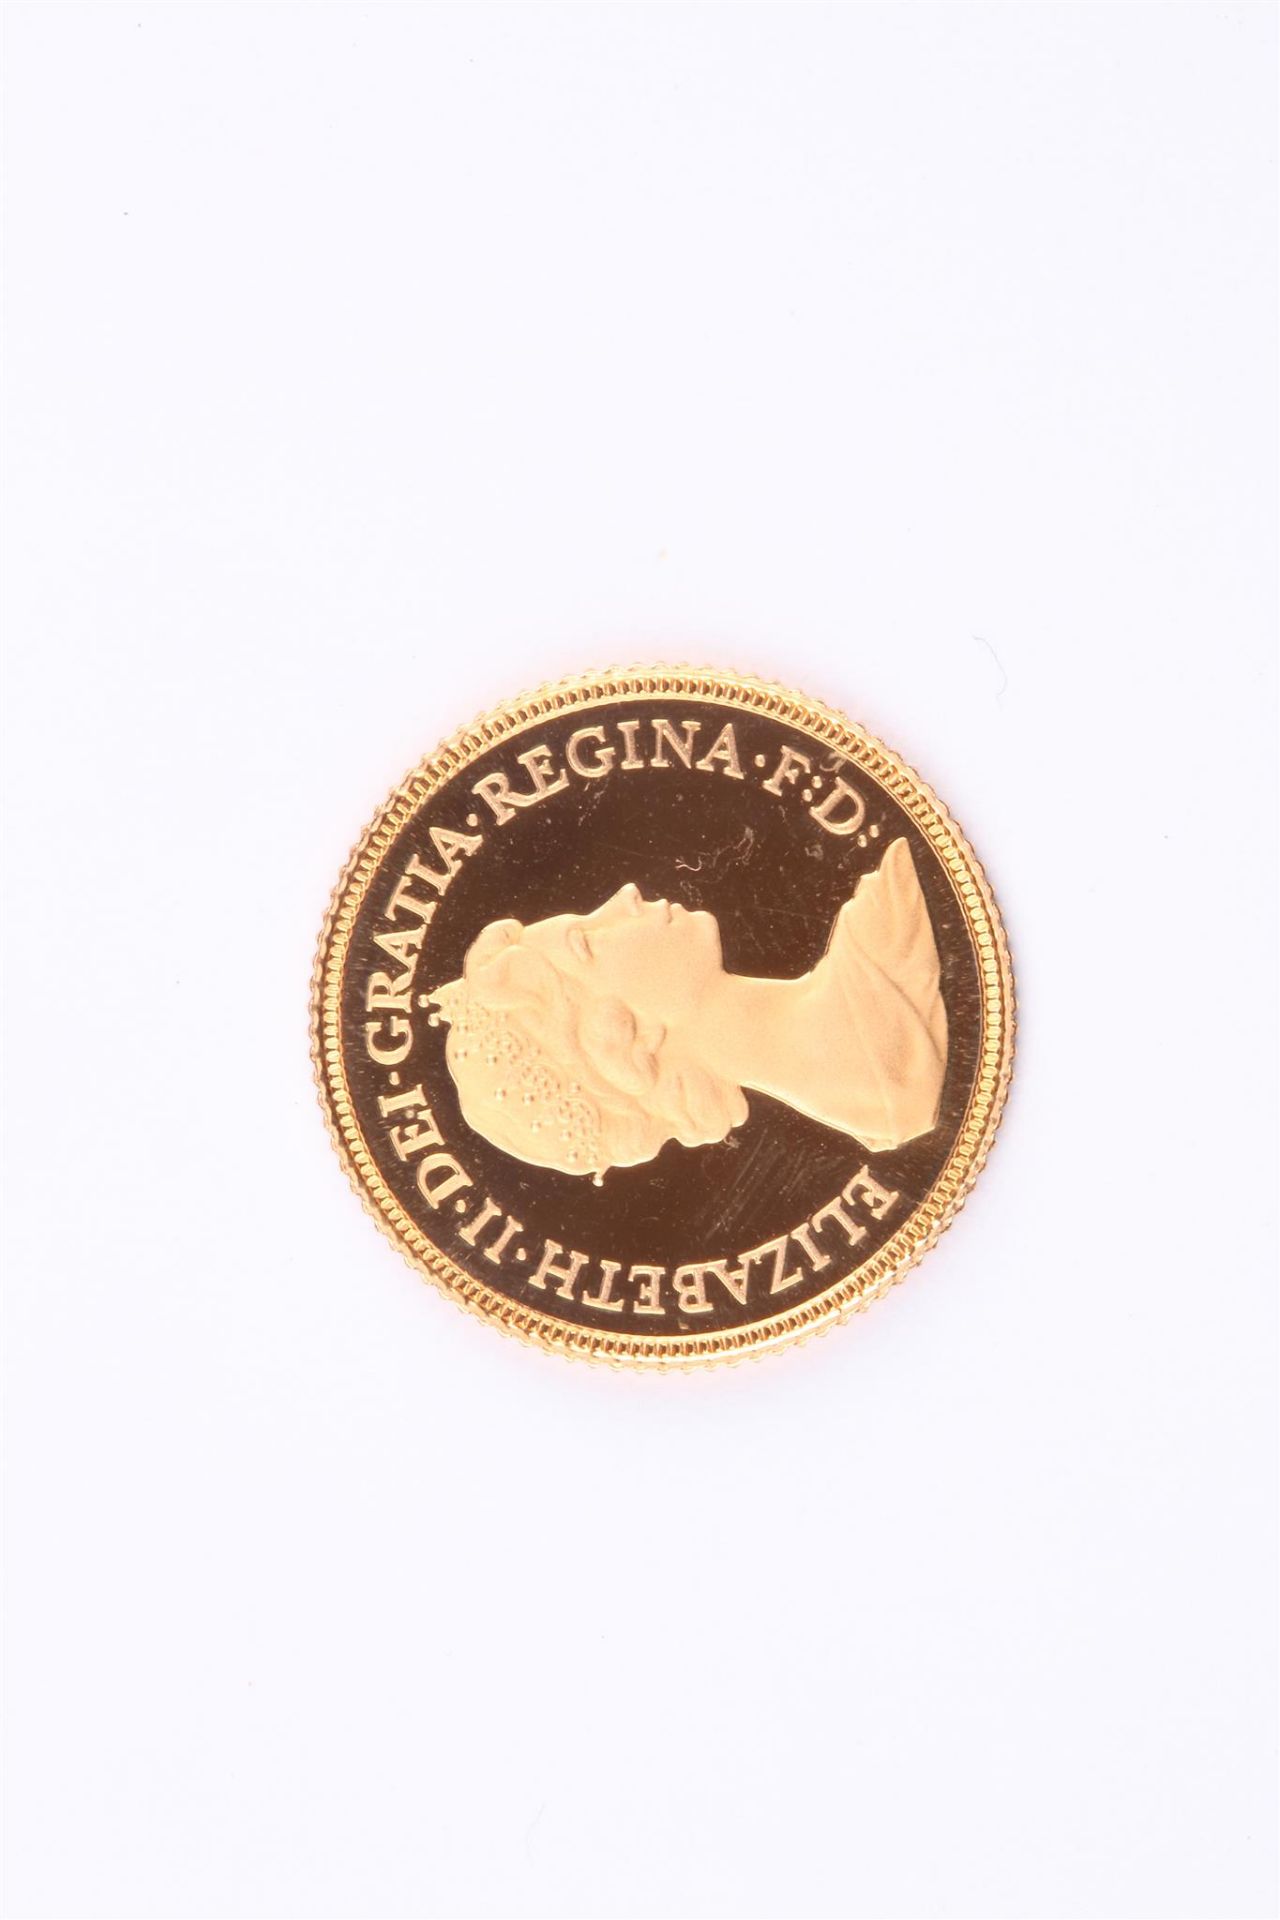 No VAT 1980 Gold Half Sovereign In Case - Image 2 of 2